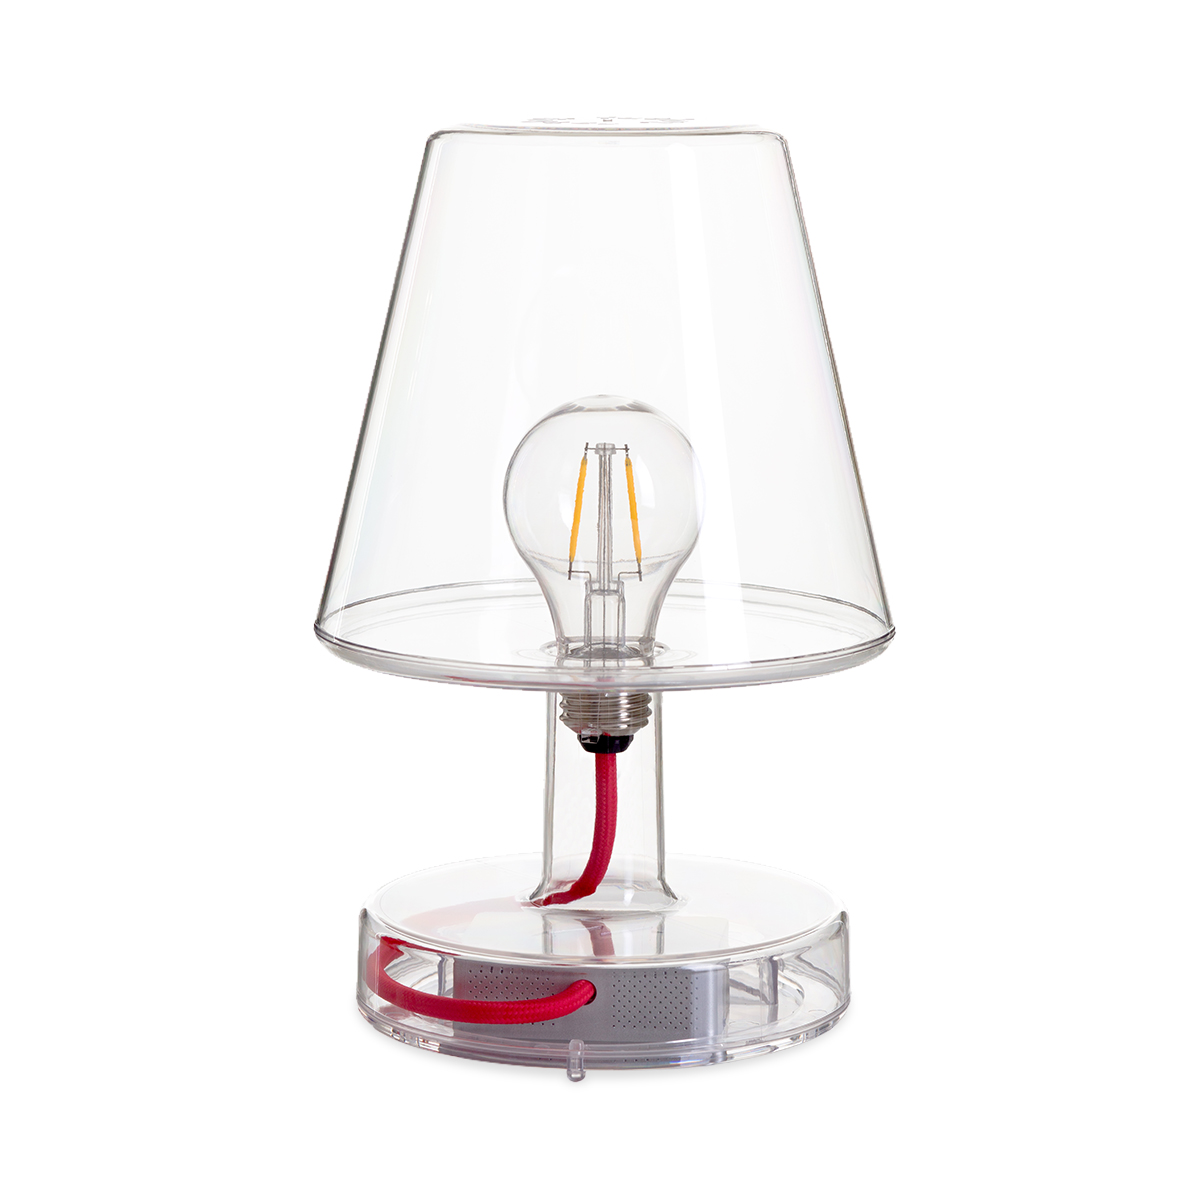 Transloetje: A translucent wireless table lamp | Fatboy